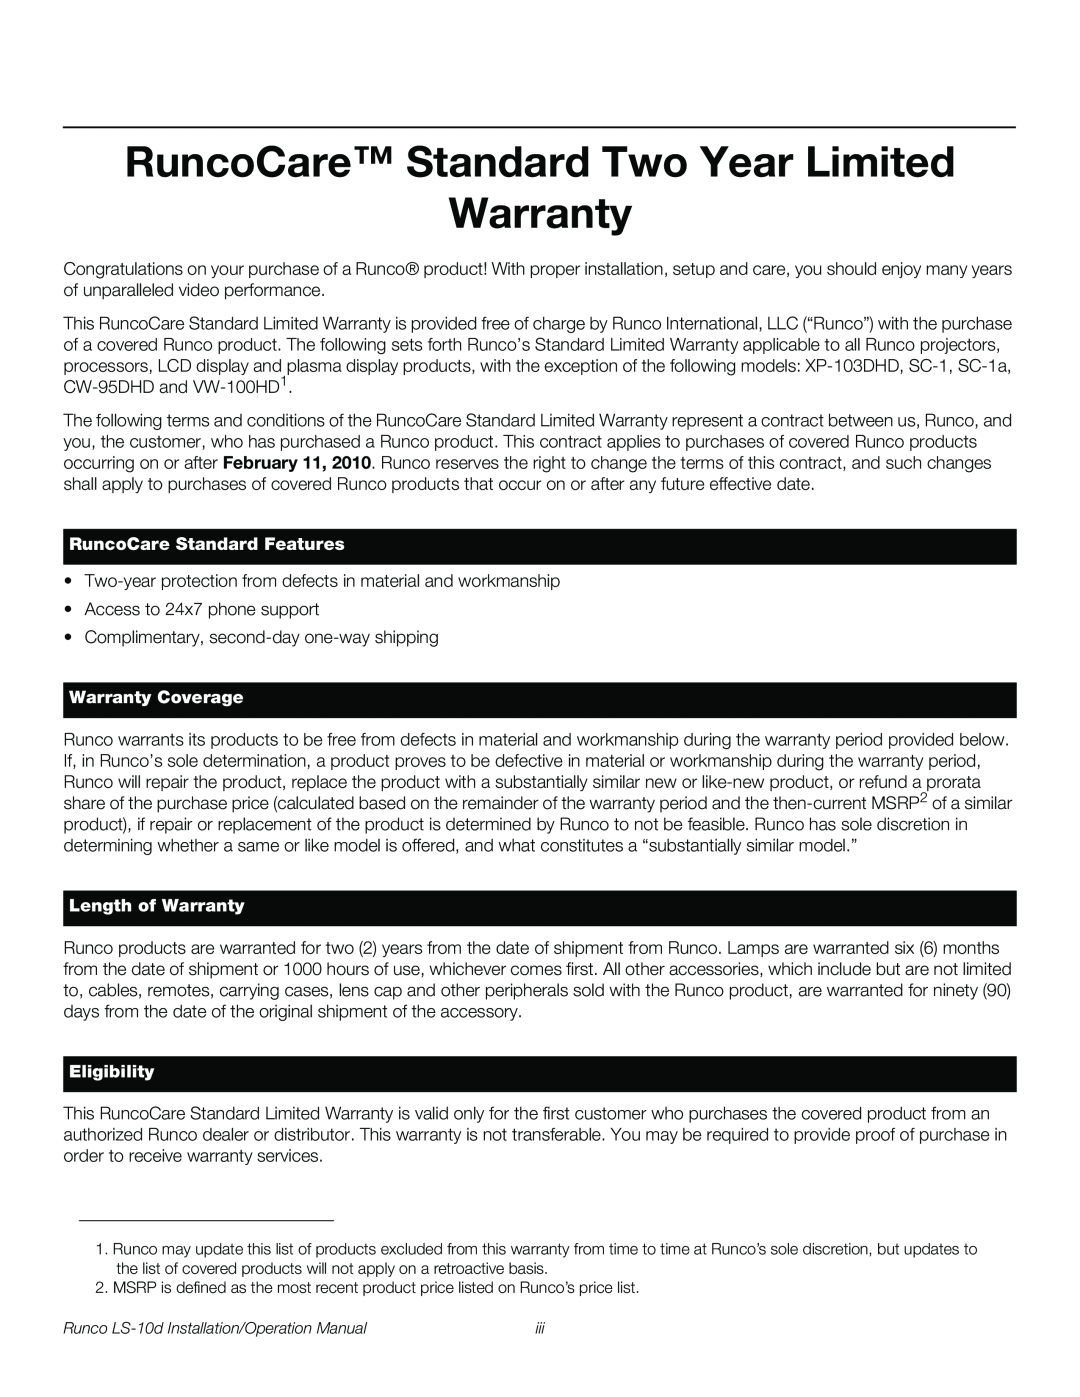 Runco LS-10D RuncoCare Standard Two Year Limited Warranty, RuncoCare Standard Features, Warranty Coverage, Eligibility 